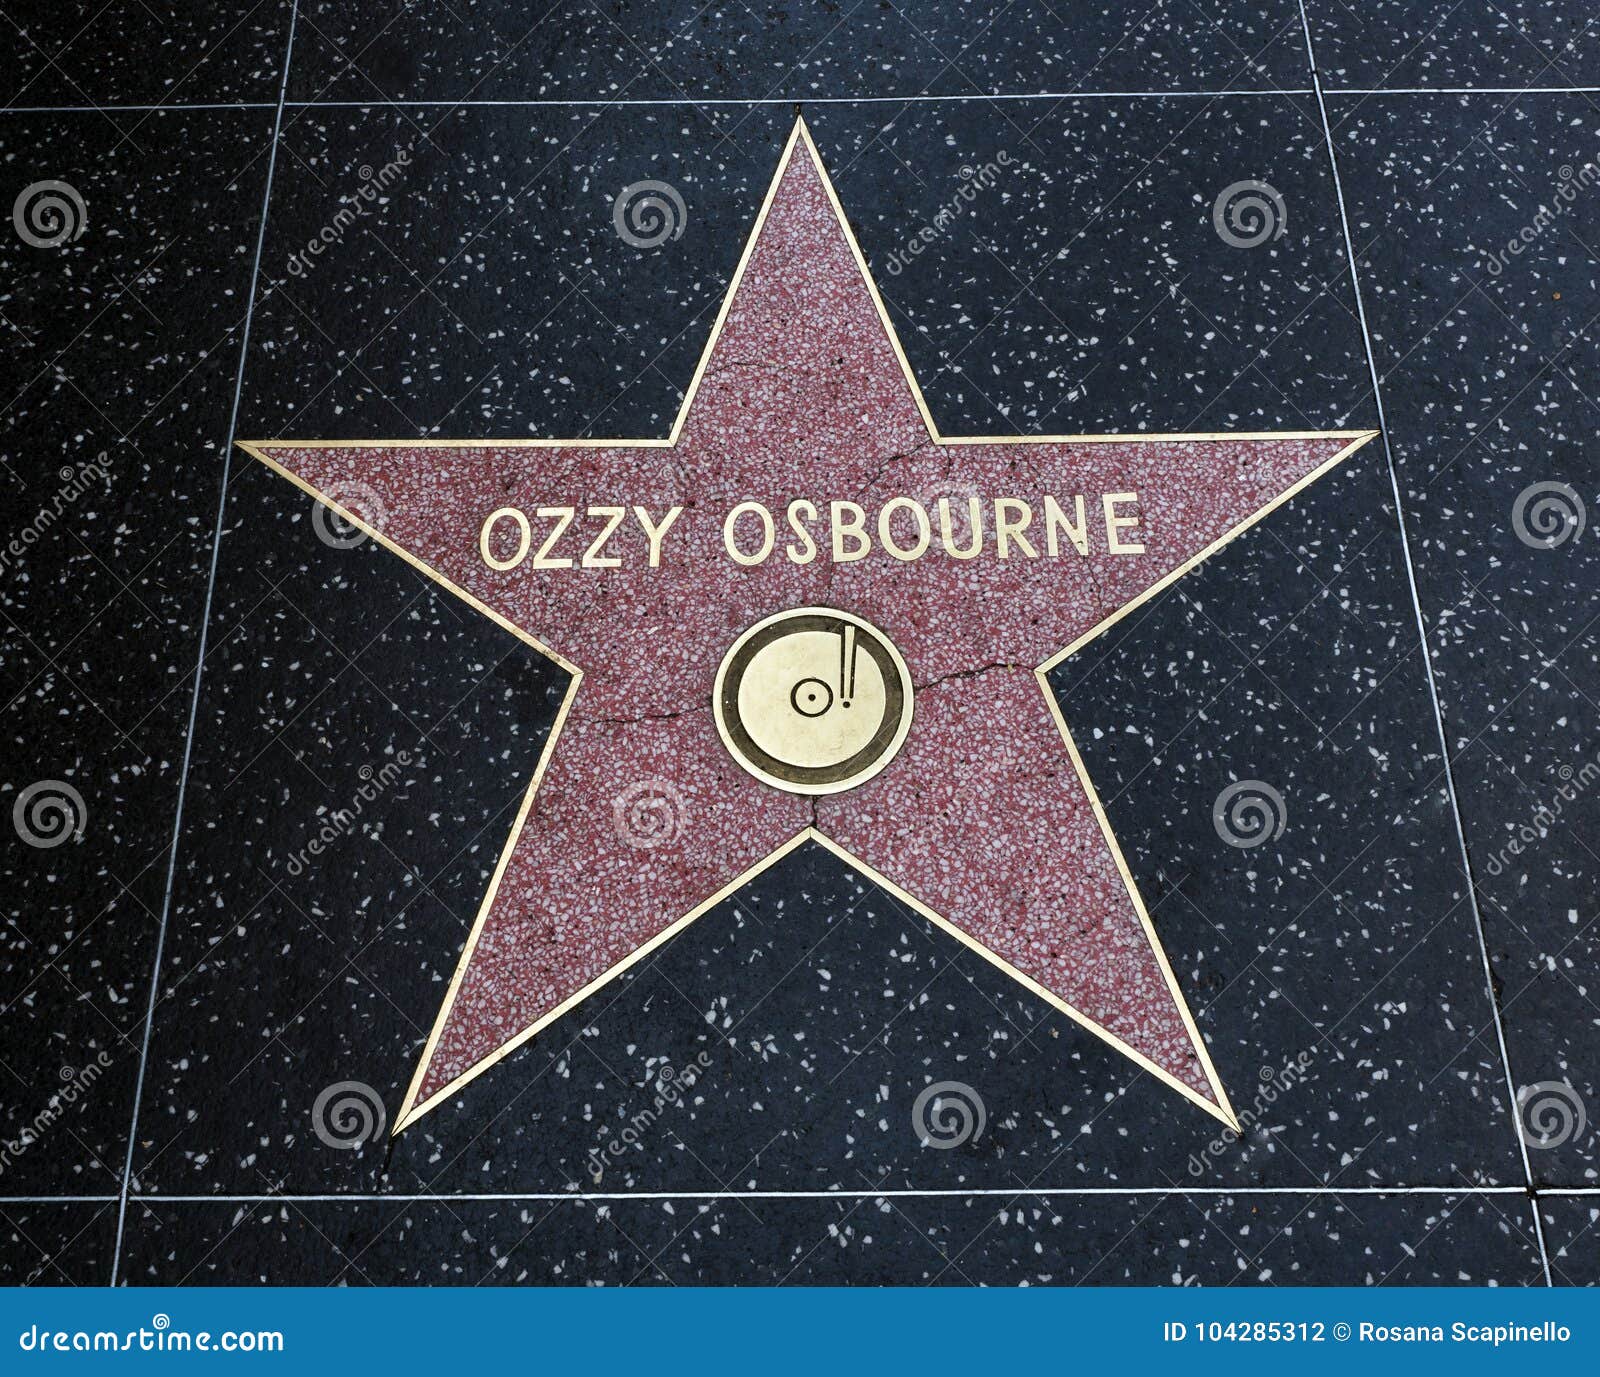 Collection 96+ Images ozzy osbourne star on hollywood walk of fame Superb